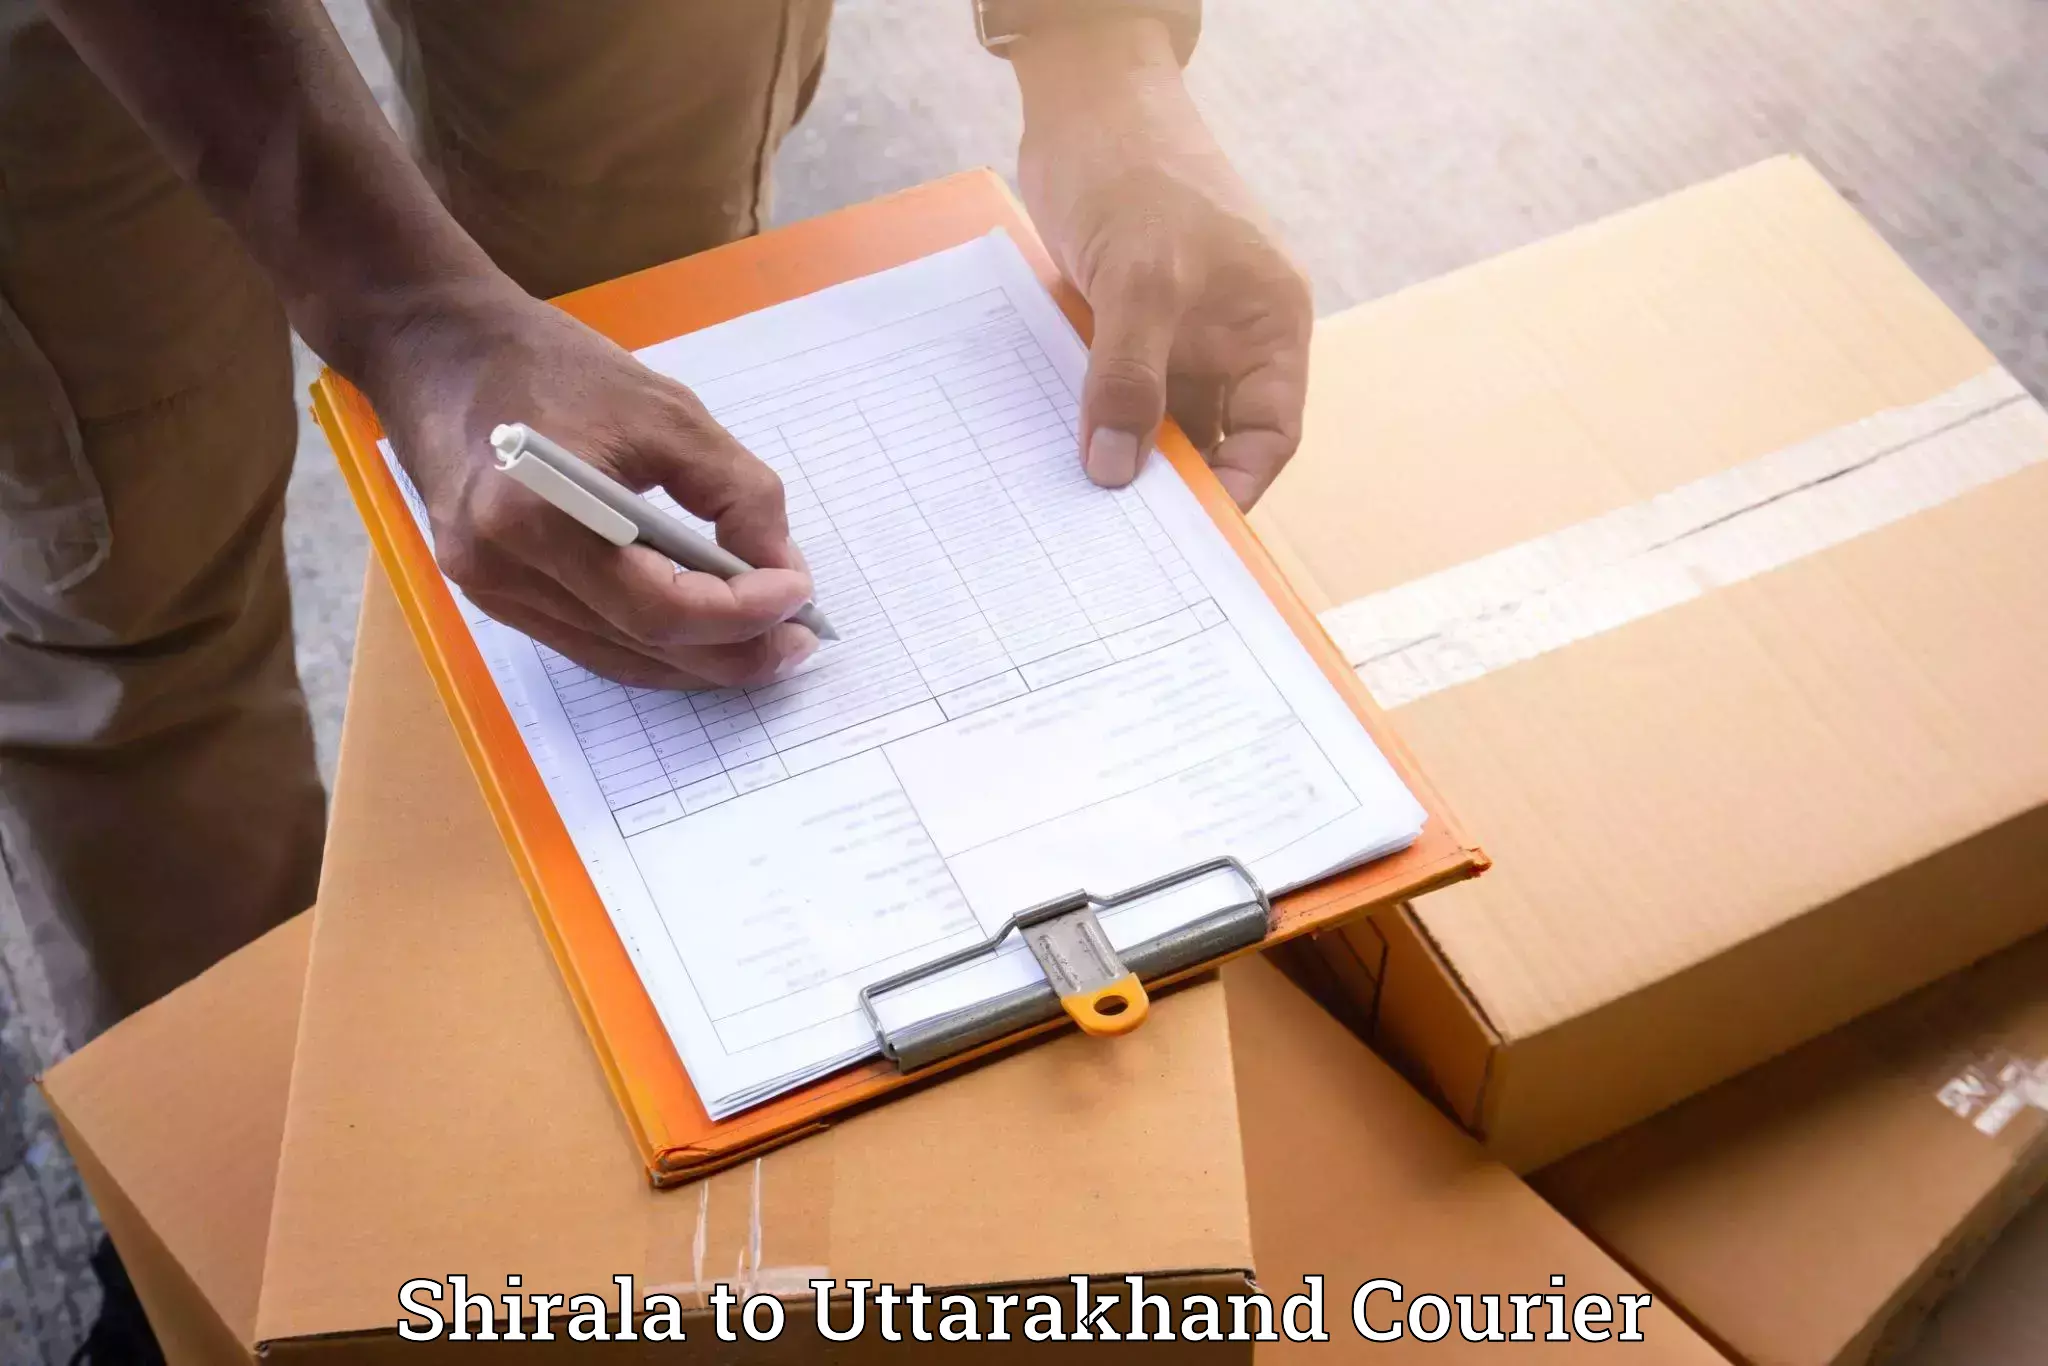 Full-service movers Shirala to Rishikesh